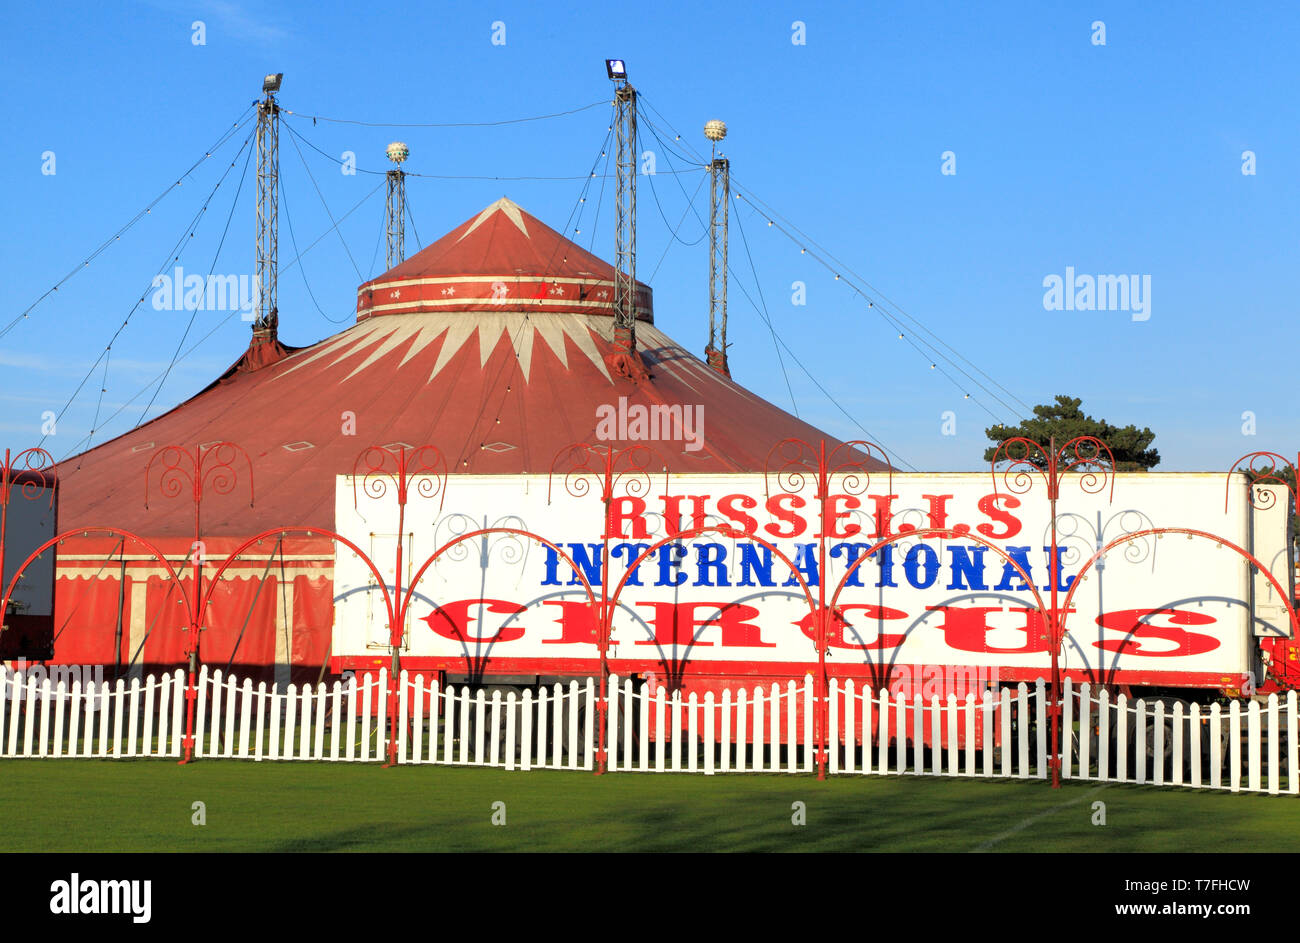 International du Cirque Russells, exposition itinérante, Chapiteau, tente, Circus Banque D'Images